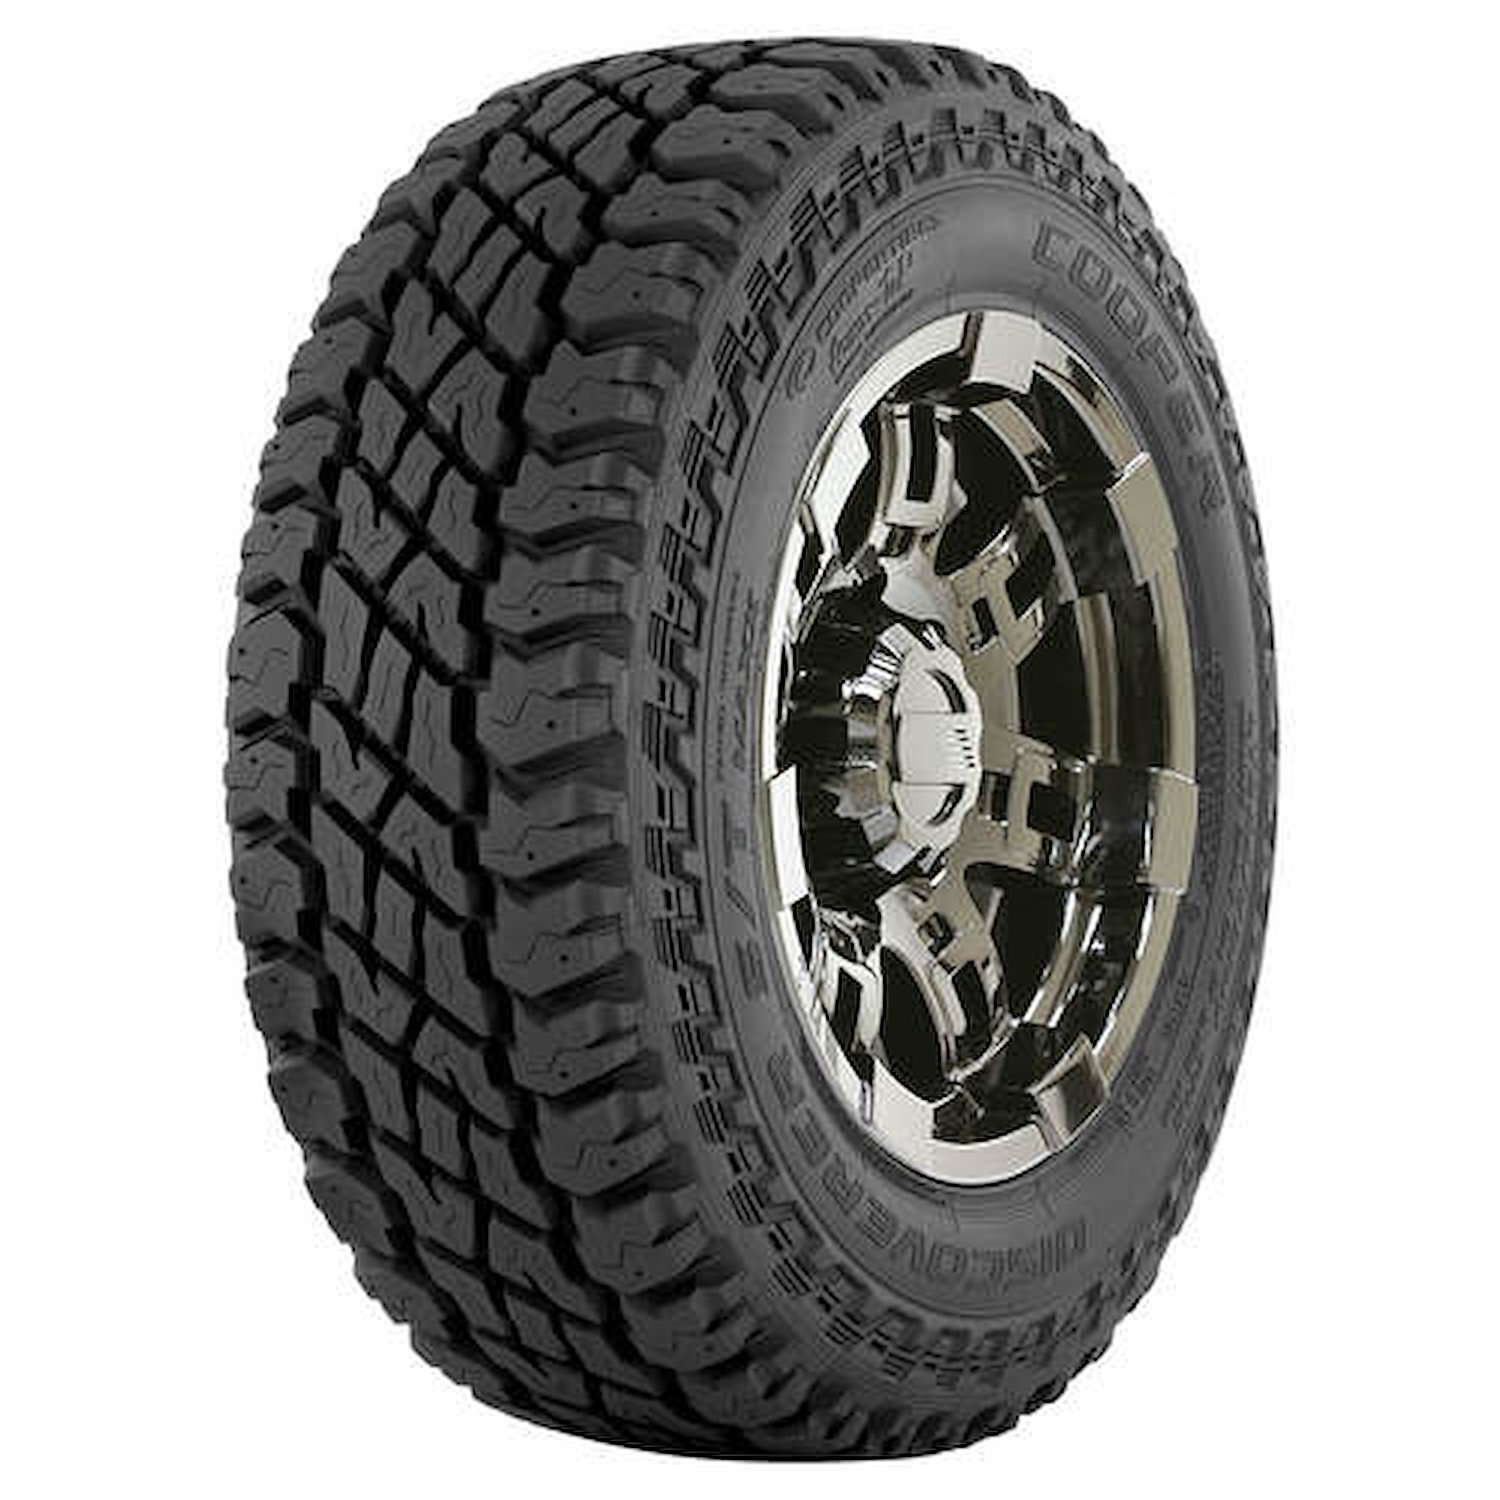 Discoverer S/T Maxx All-Terrain Tire, LT285/70R17